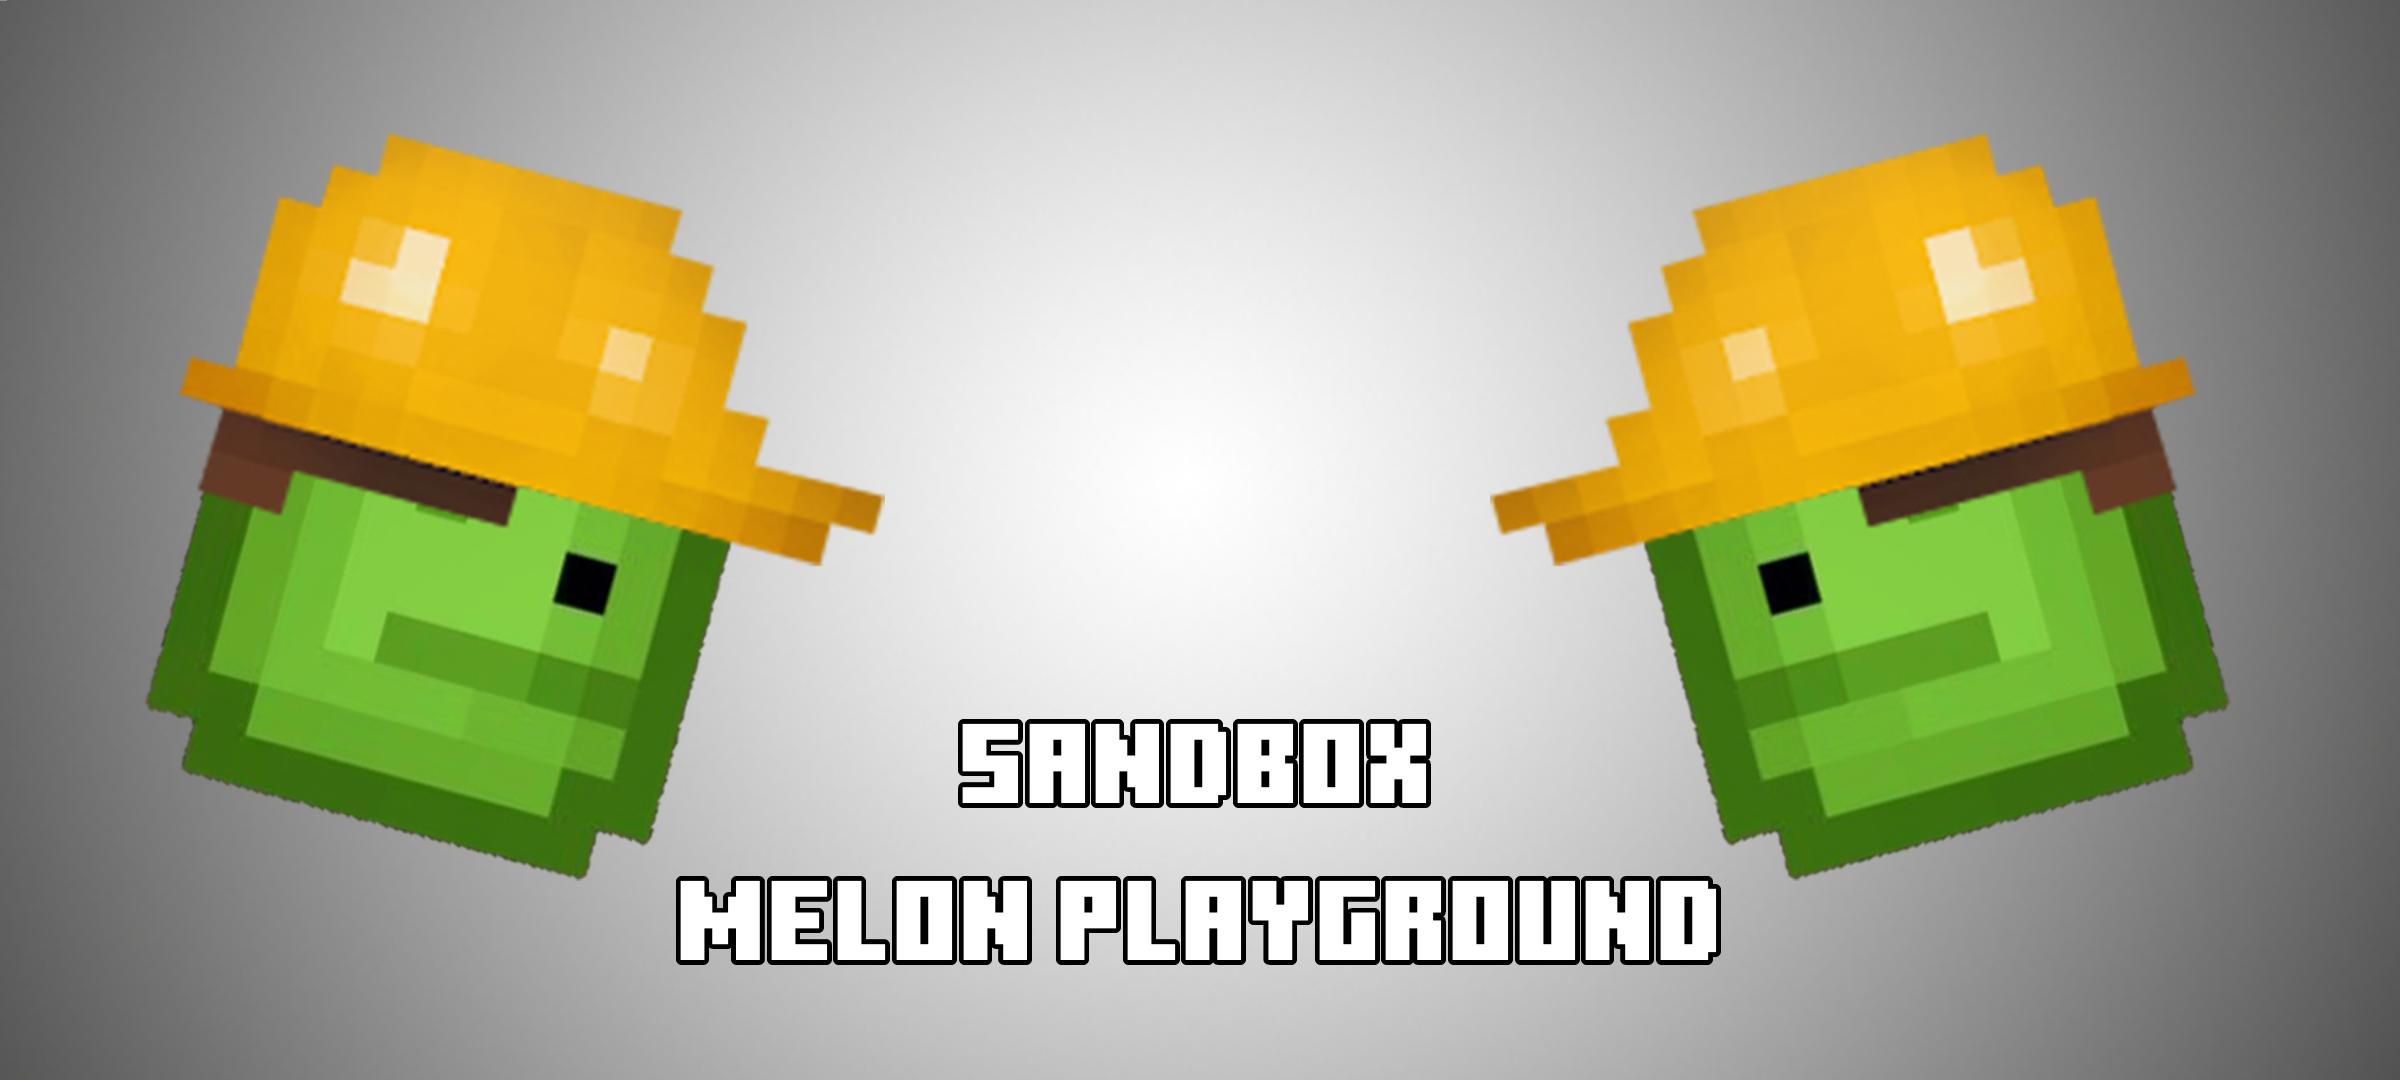 Melon Playground (@PlaygroundMelon) / X